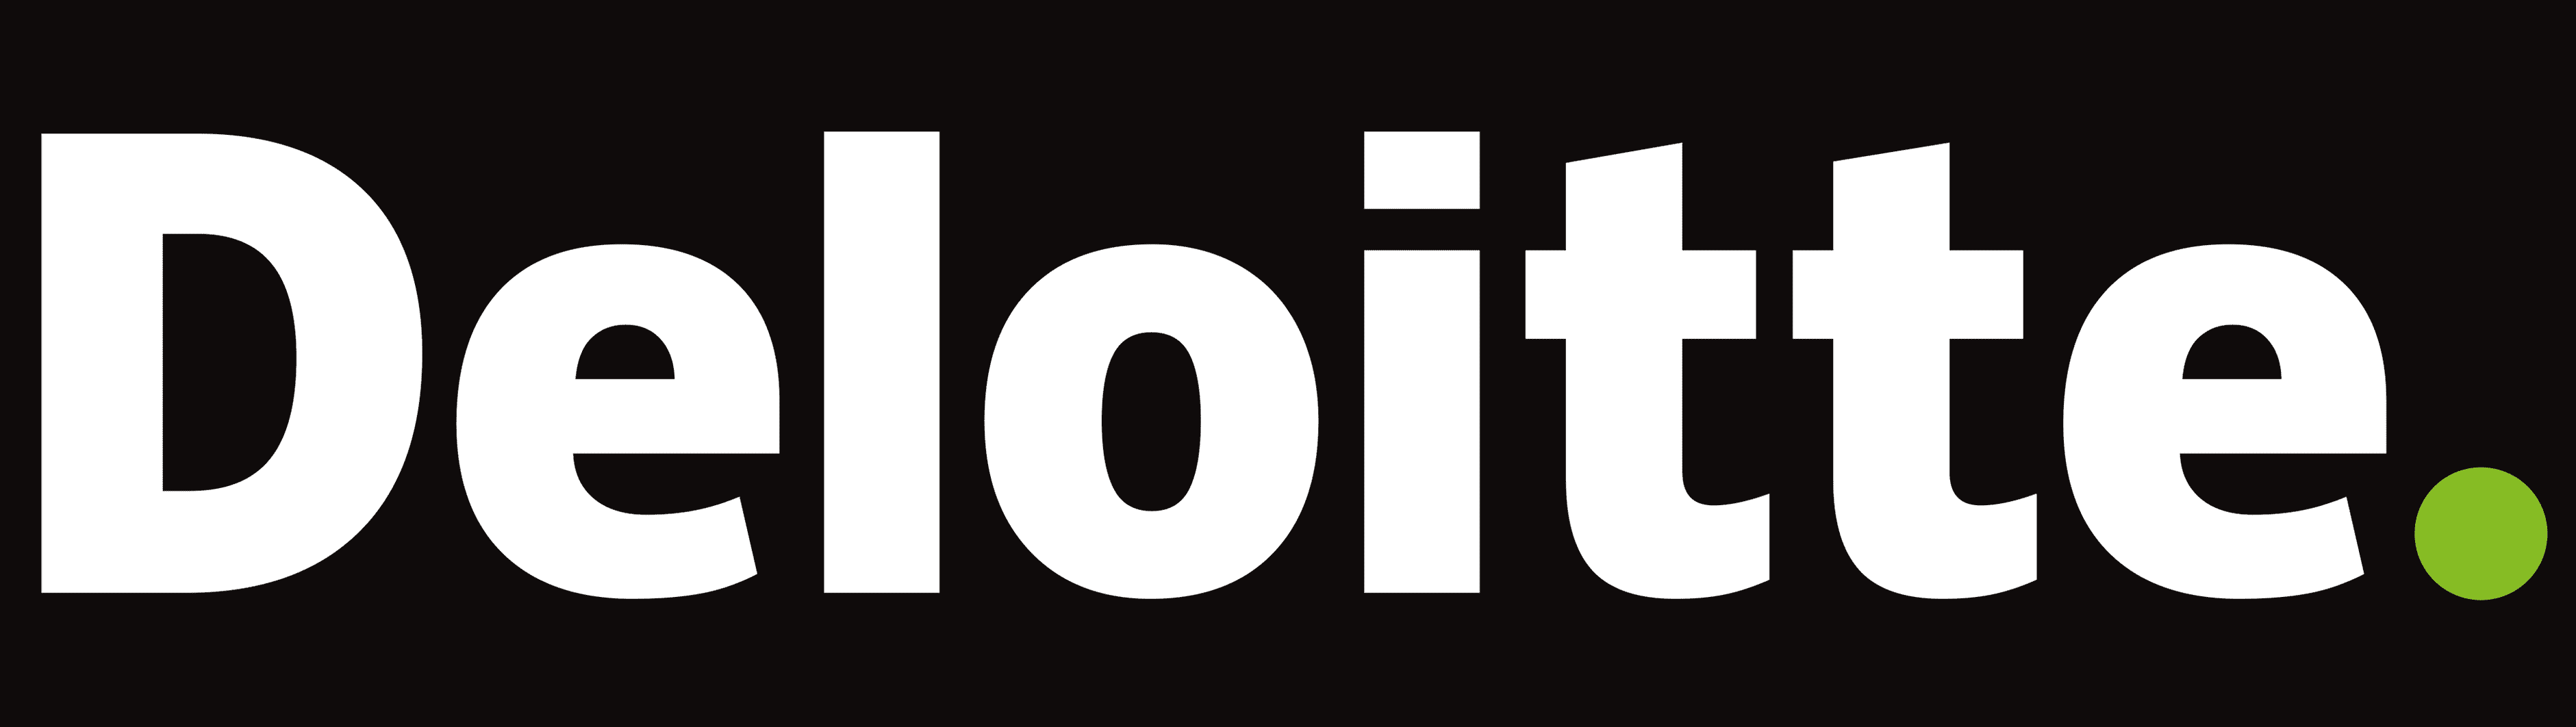 deloitte logo white